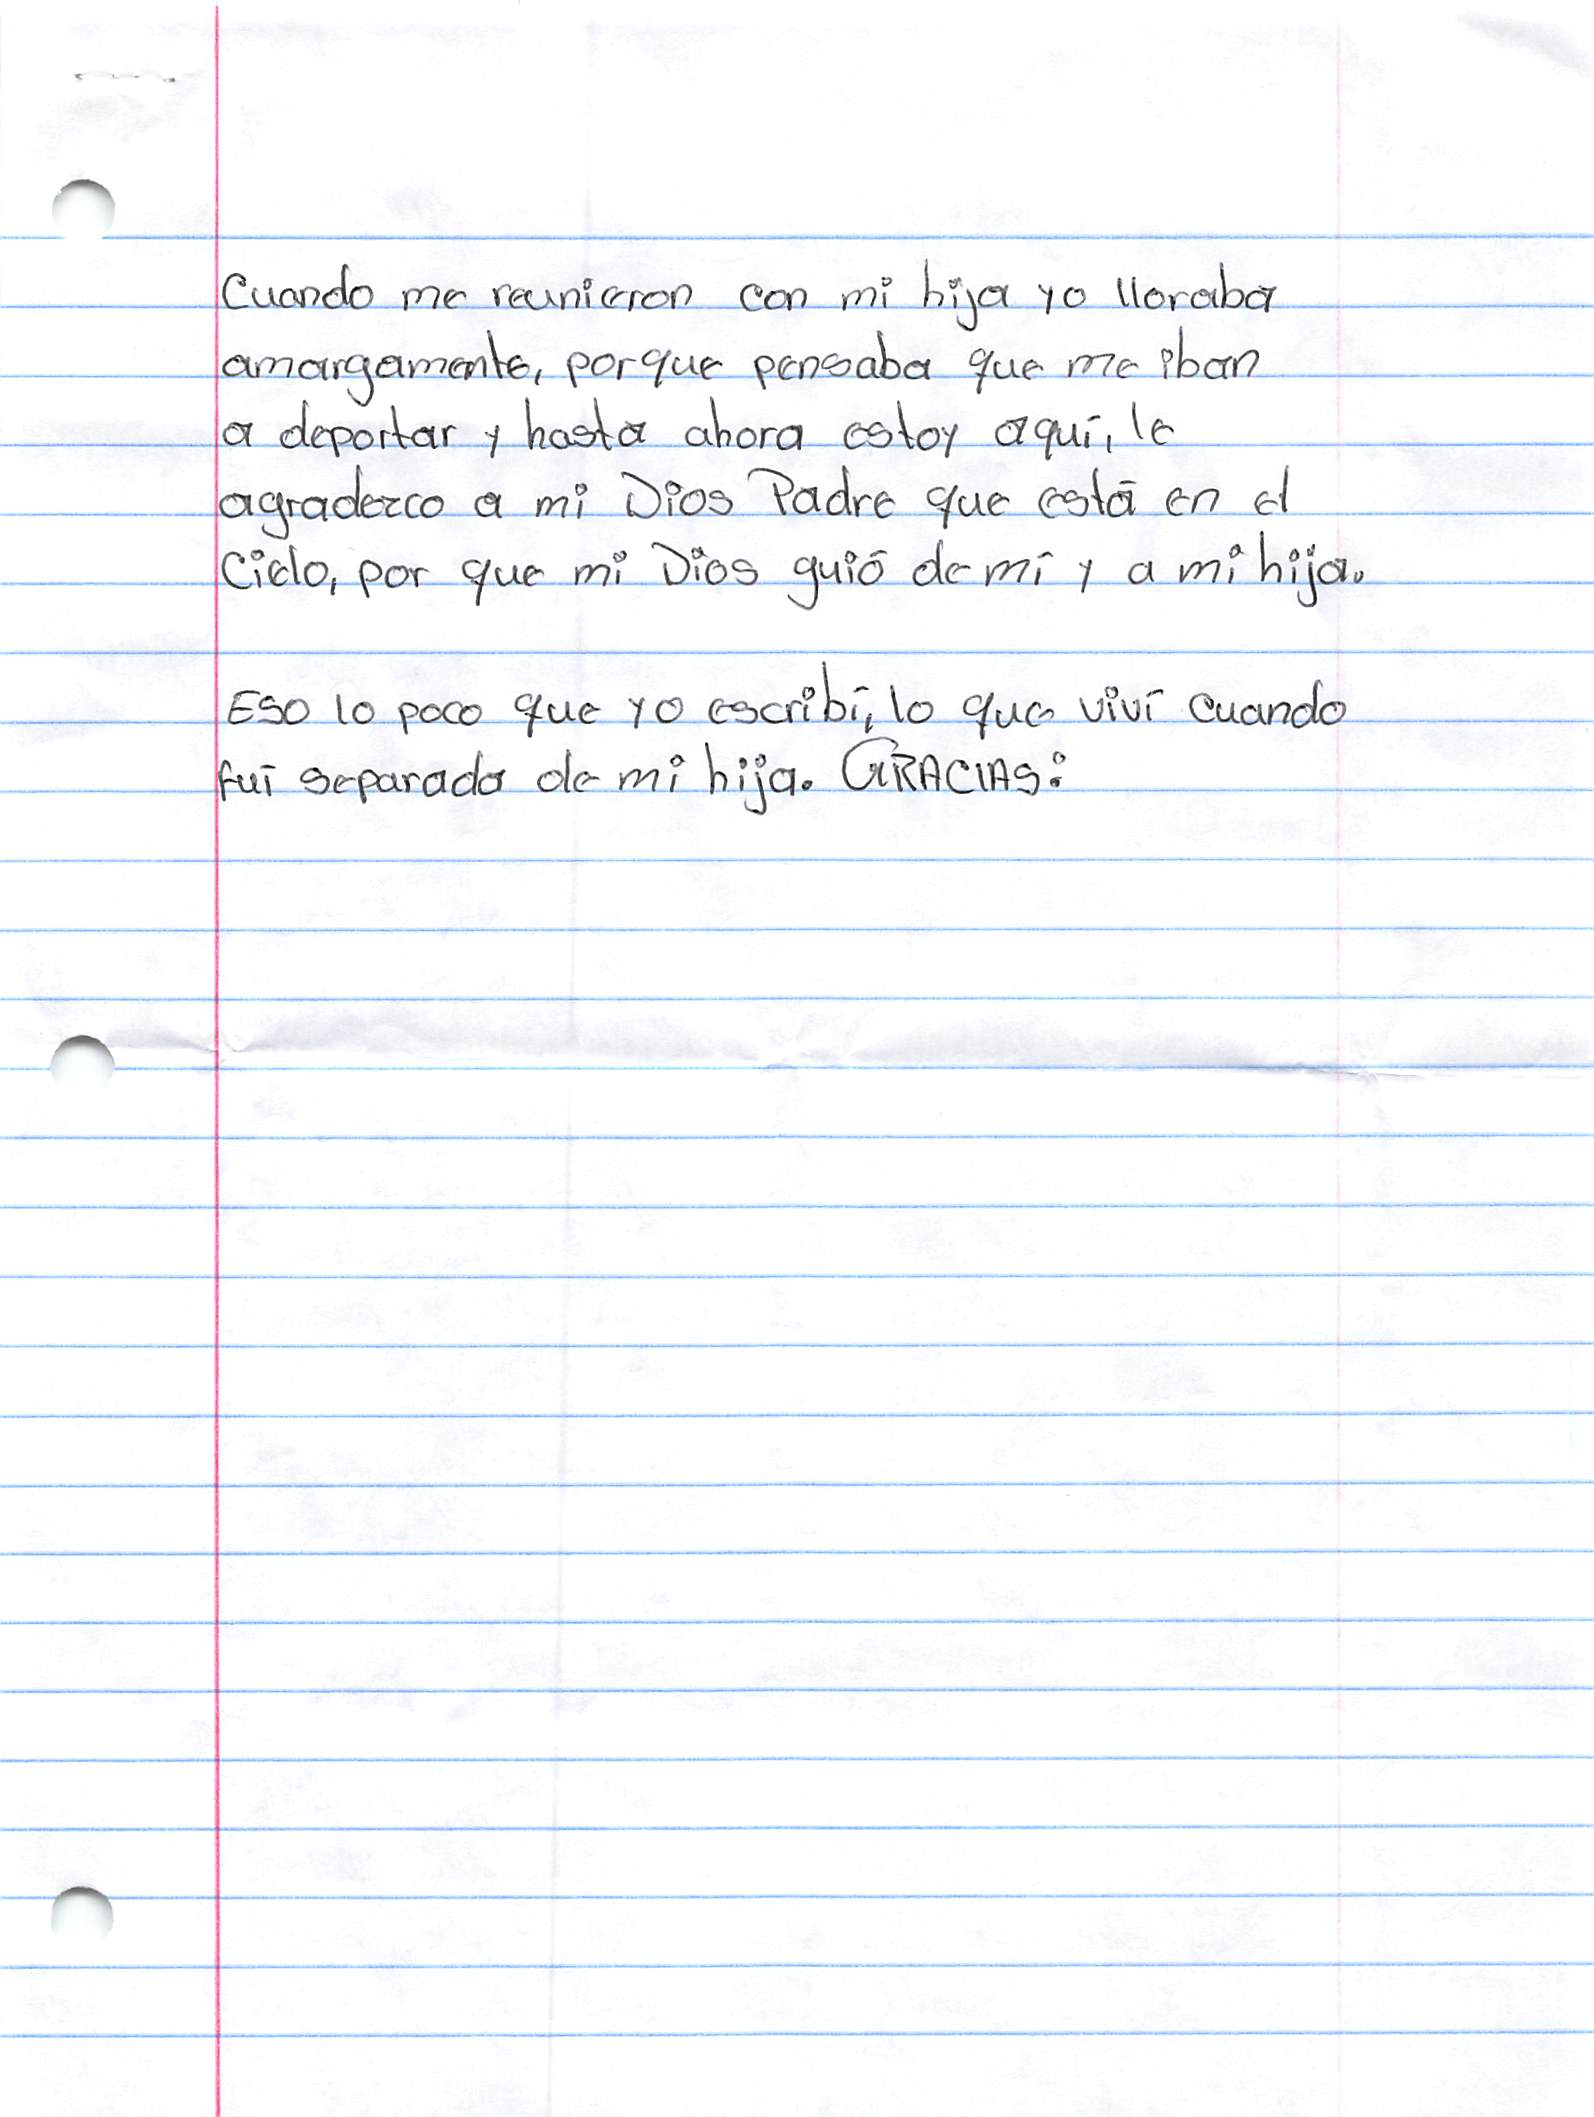 Laura's Handwritten Letter